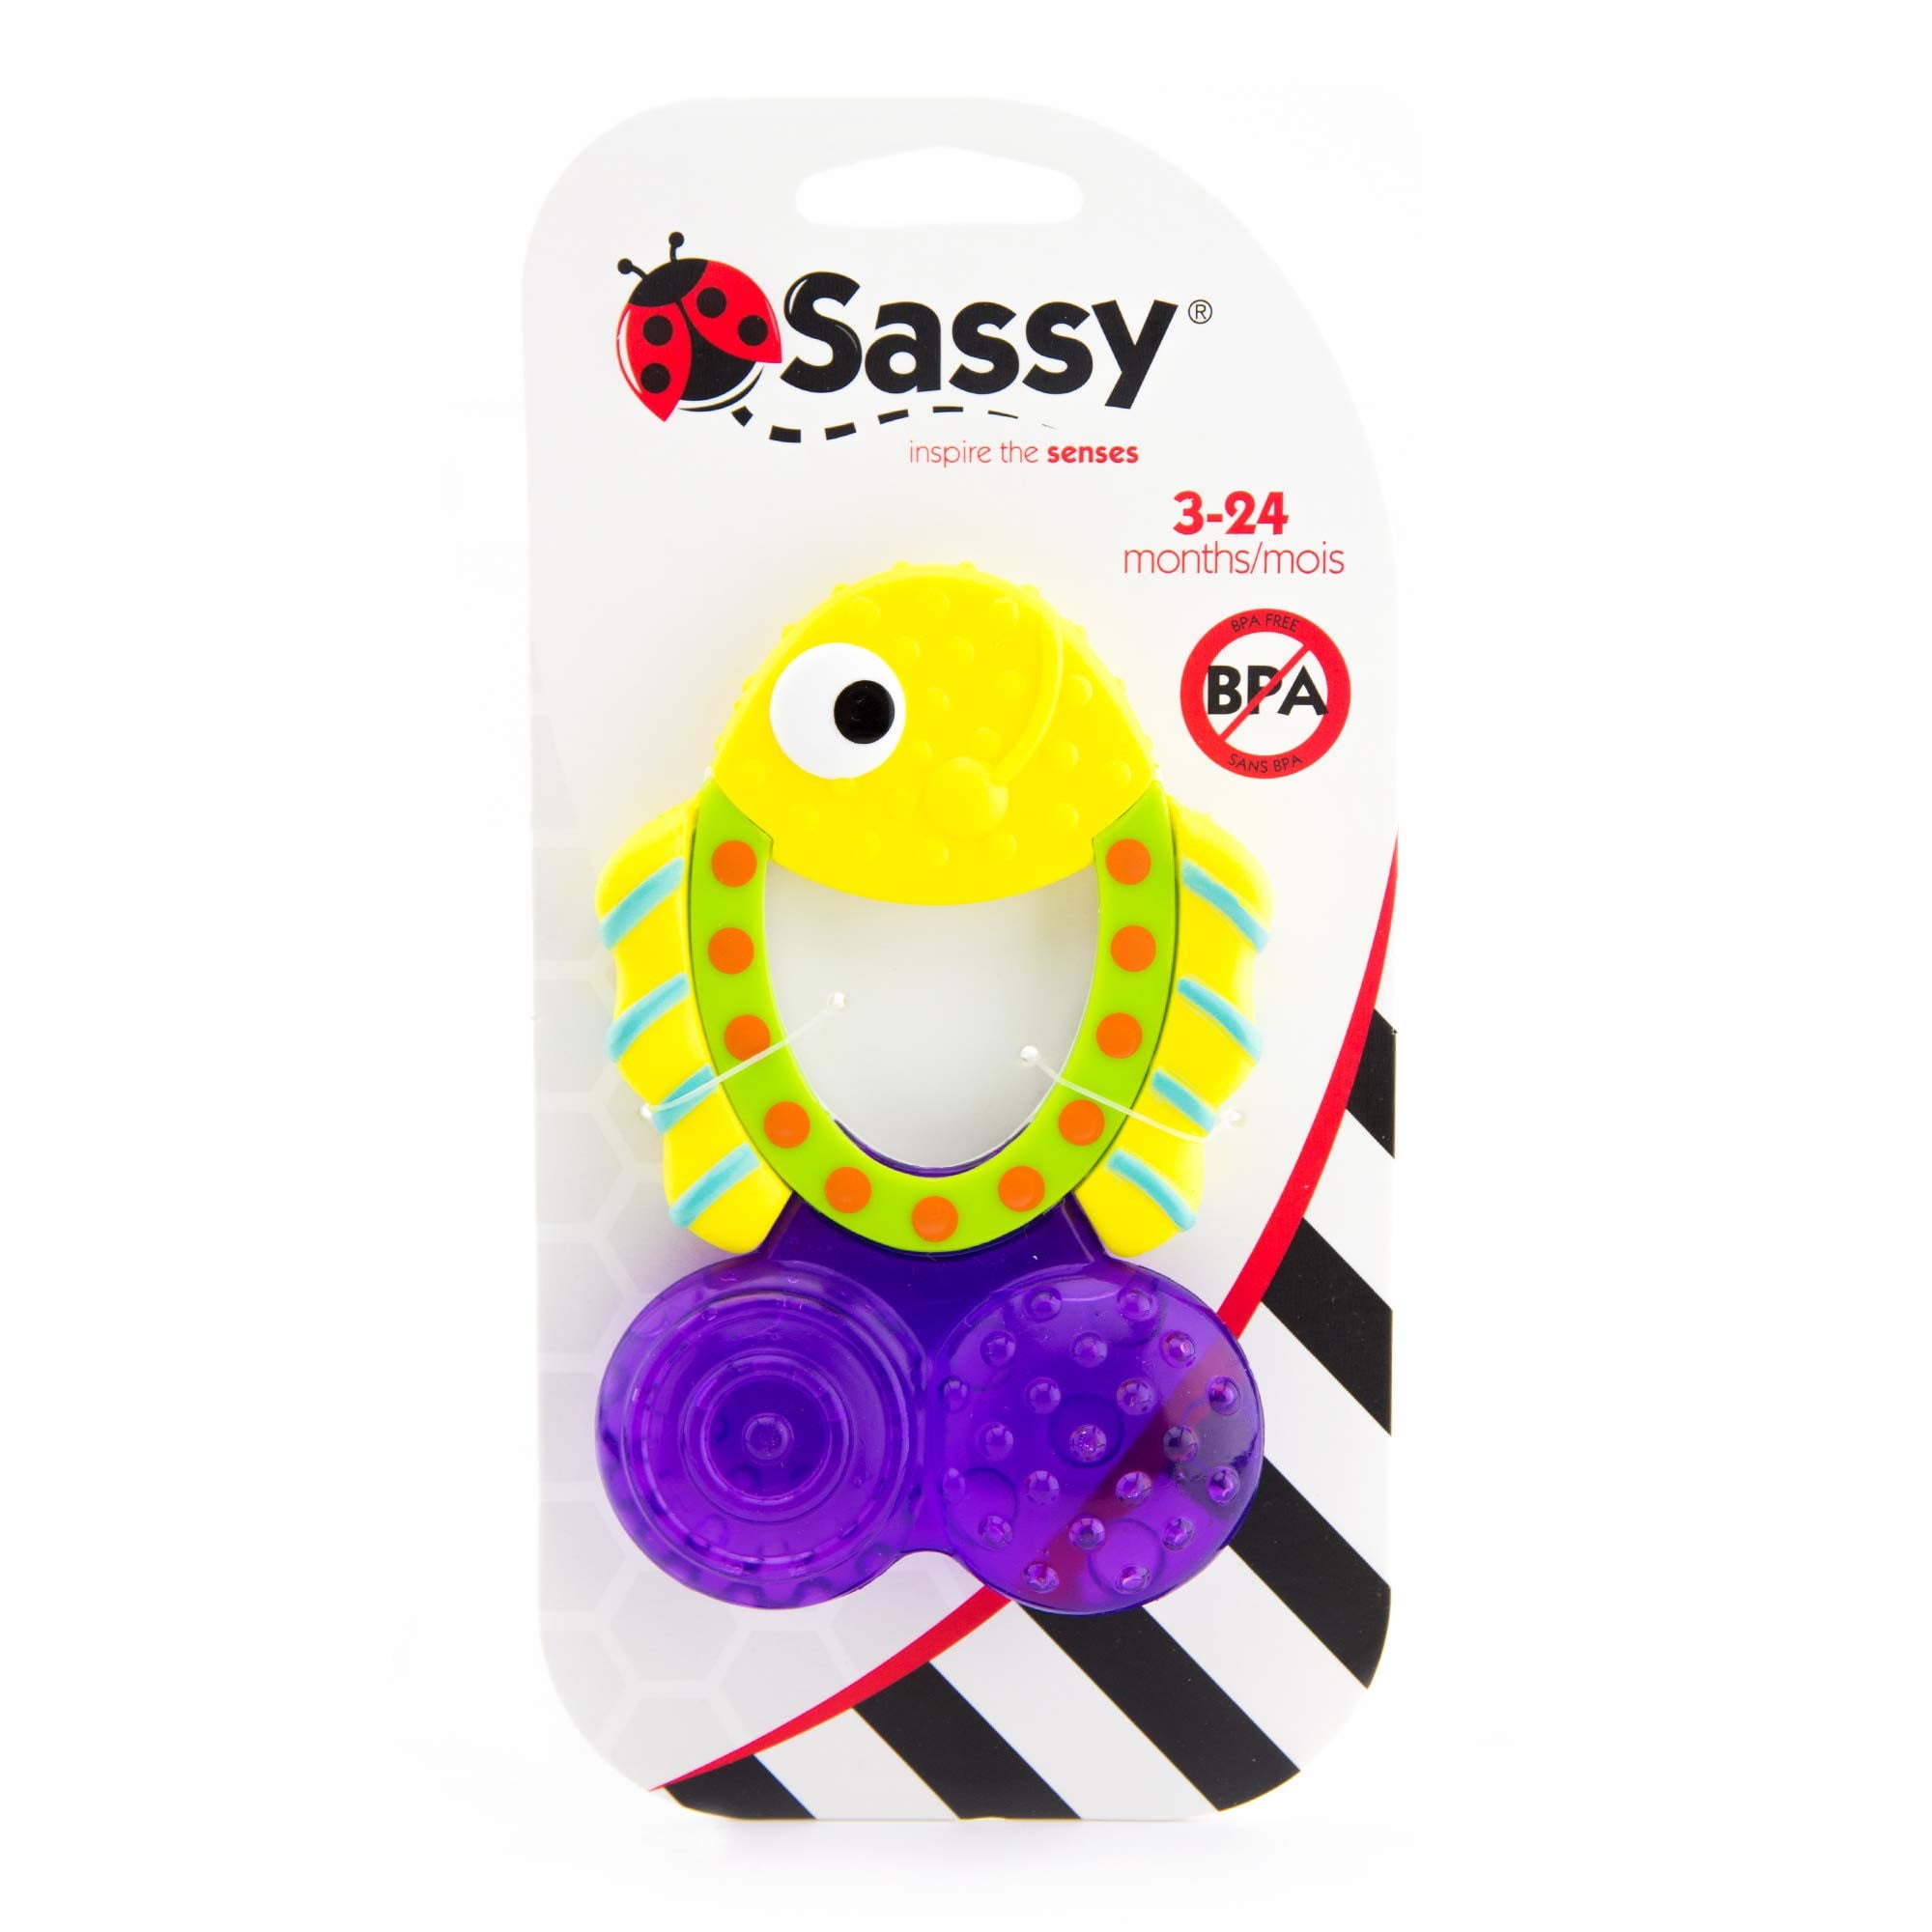 sassy teething toys